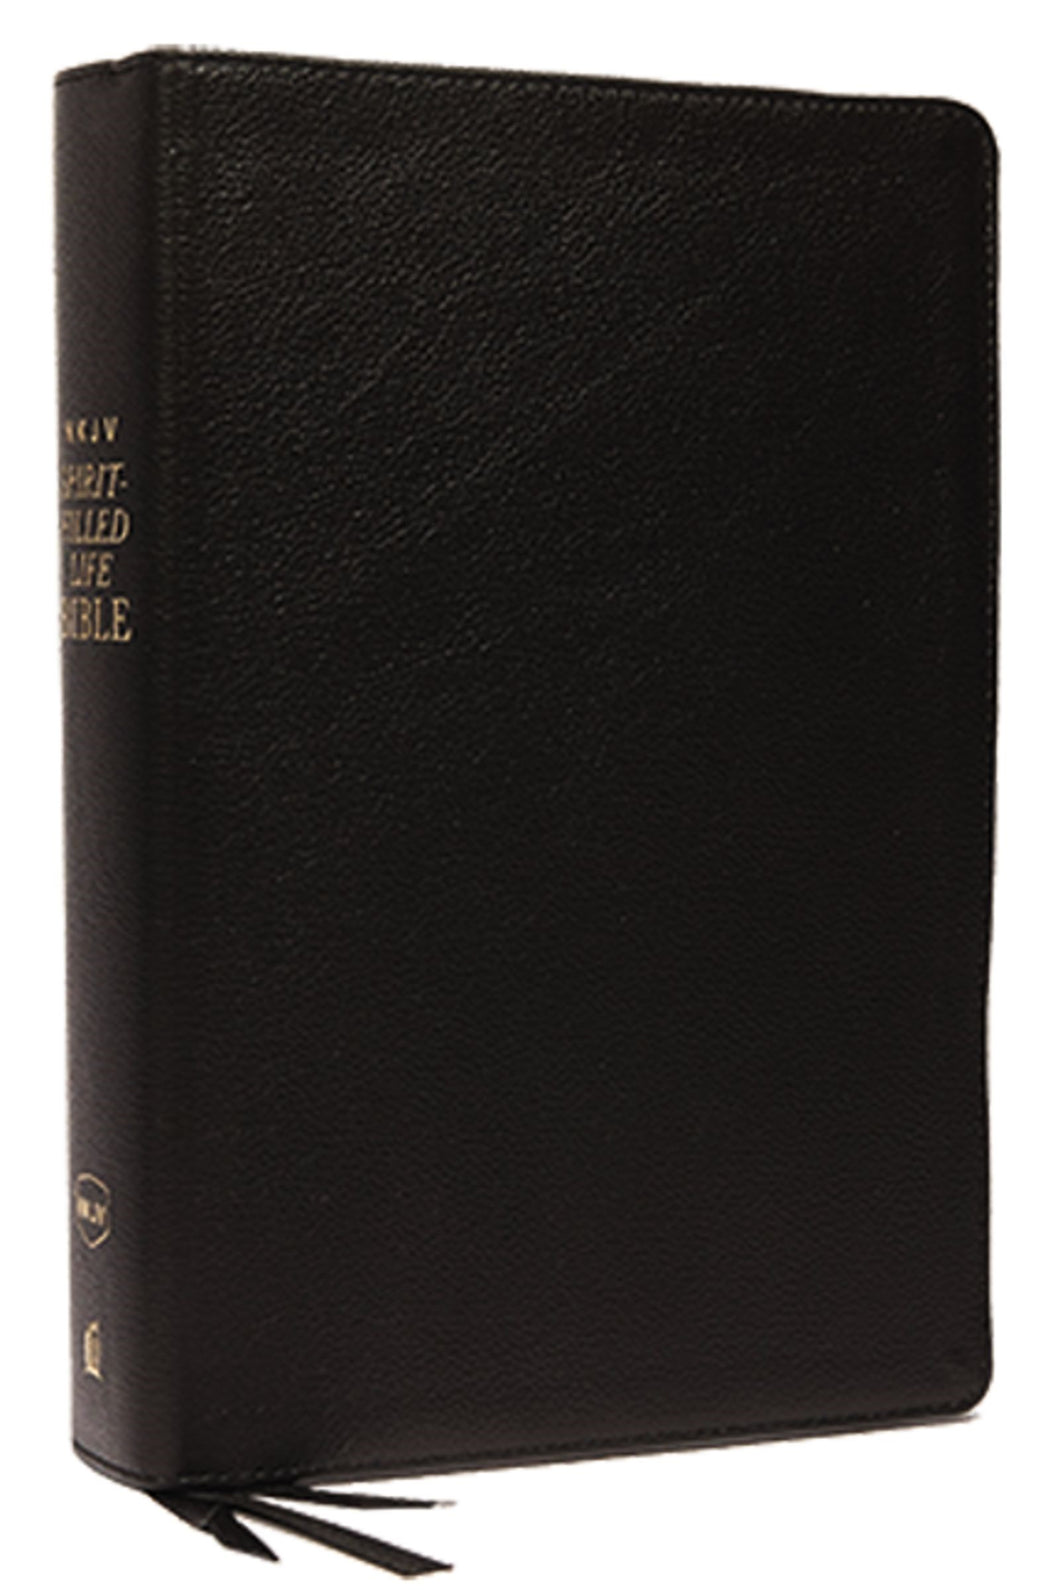 NKJV Spirit-Filled Life Bible (Third Edition) (Comfort Print)-Black Genuine Leather Indexed